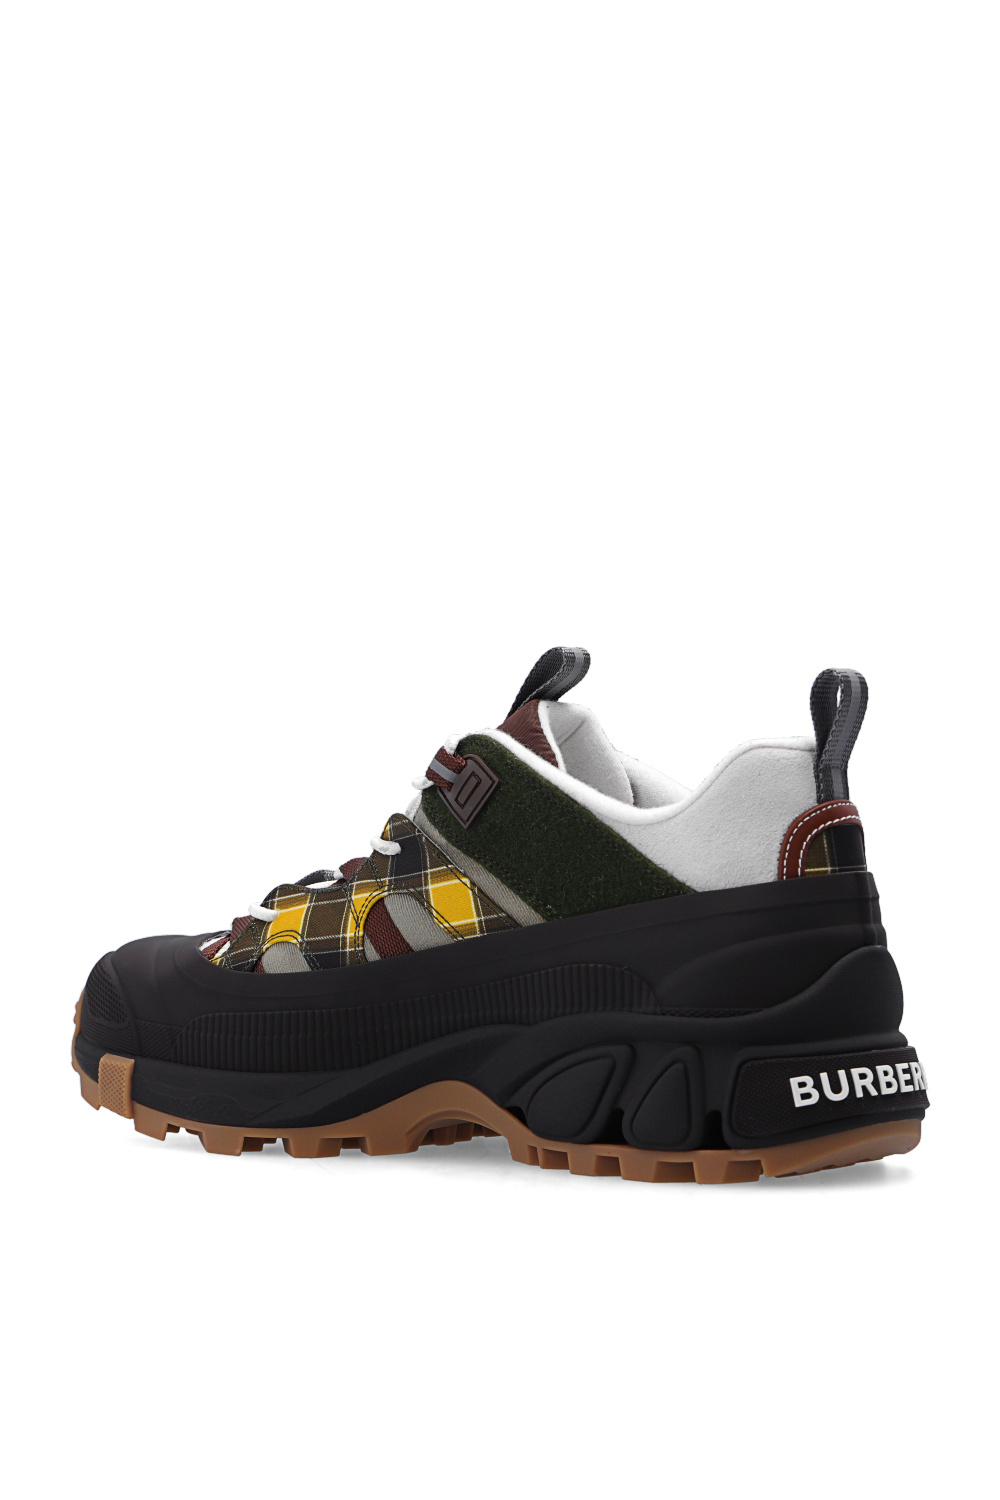 burberry kensington ‘Arthur’ sneakers